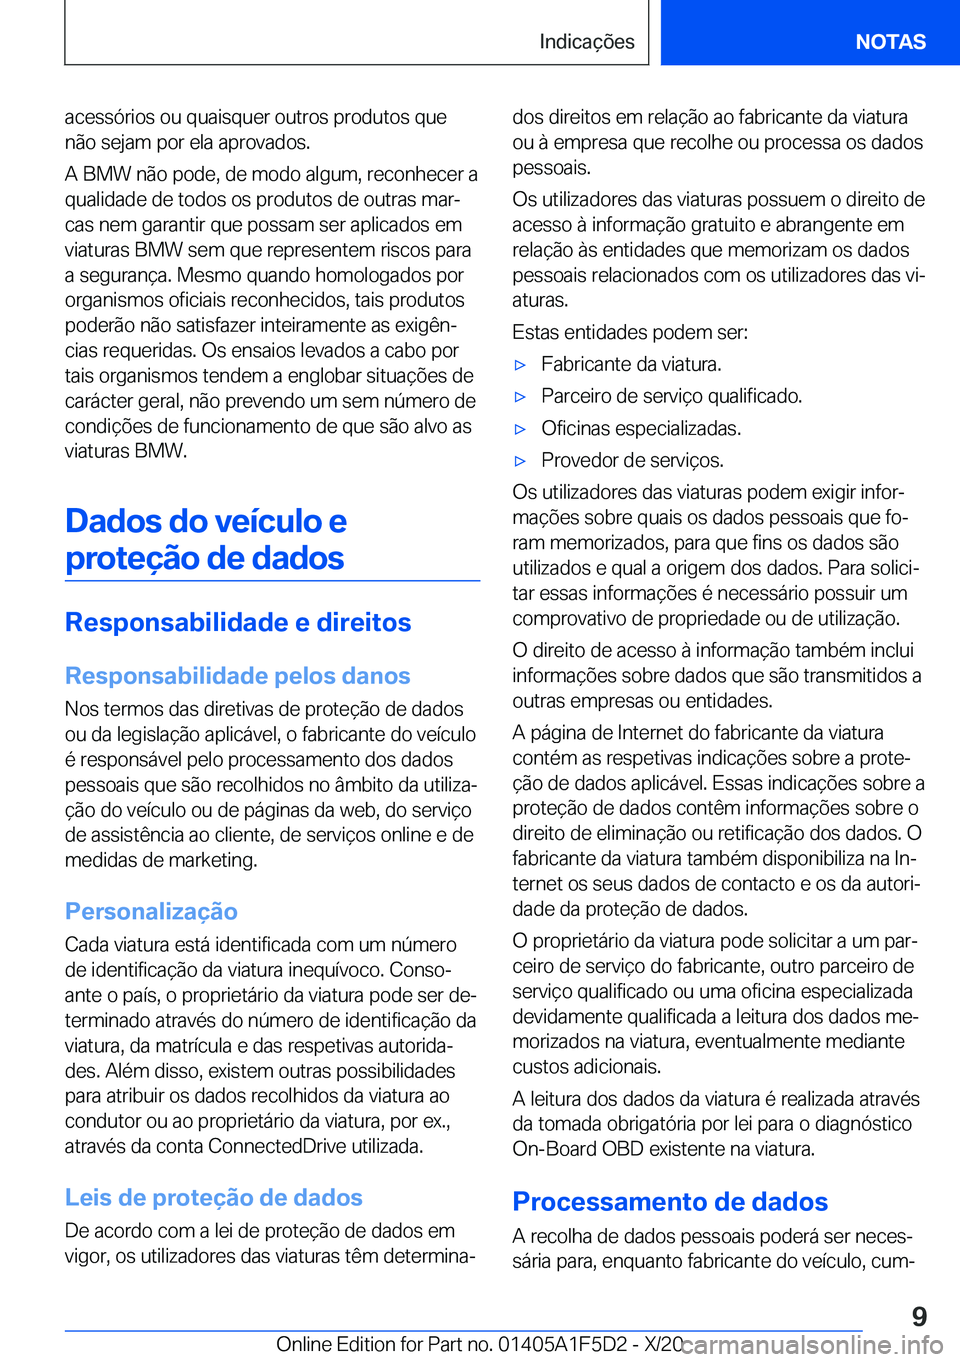 BMW X4 M 2021  Manual do condutor (in Portuguese) �a�c�e�s�s�ó�r�i�o�s��o�u��q�u�a�i�s�q�u�e�r��o�u�t�r�o�s��p�r�o�d�u�t�o�s��q�u�e
�n�ã�o��s�e�j�a�m��p�o�r��e�l�a��a�p�r�o�v�a�d�o�s�.
�A��B�M�W��n�ã�o��p�o�d�e�,��d�e��m�o�d�o��a�l�